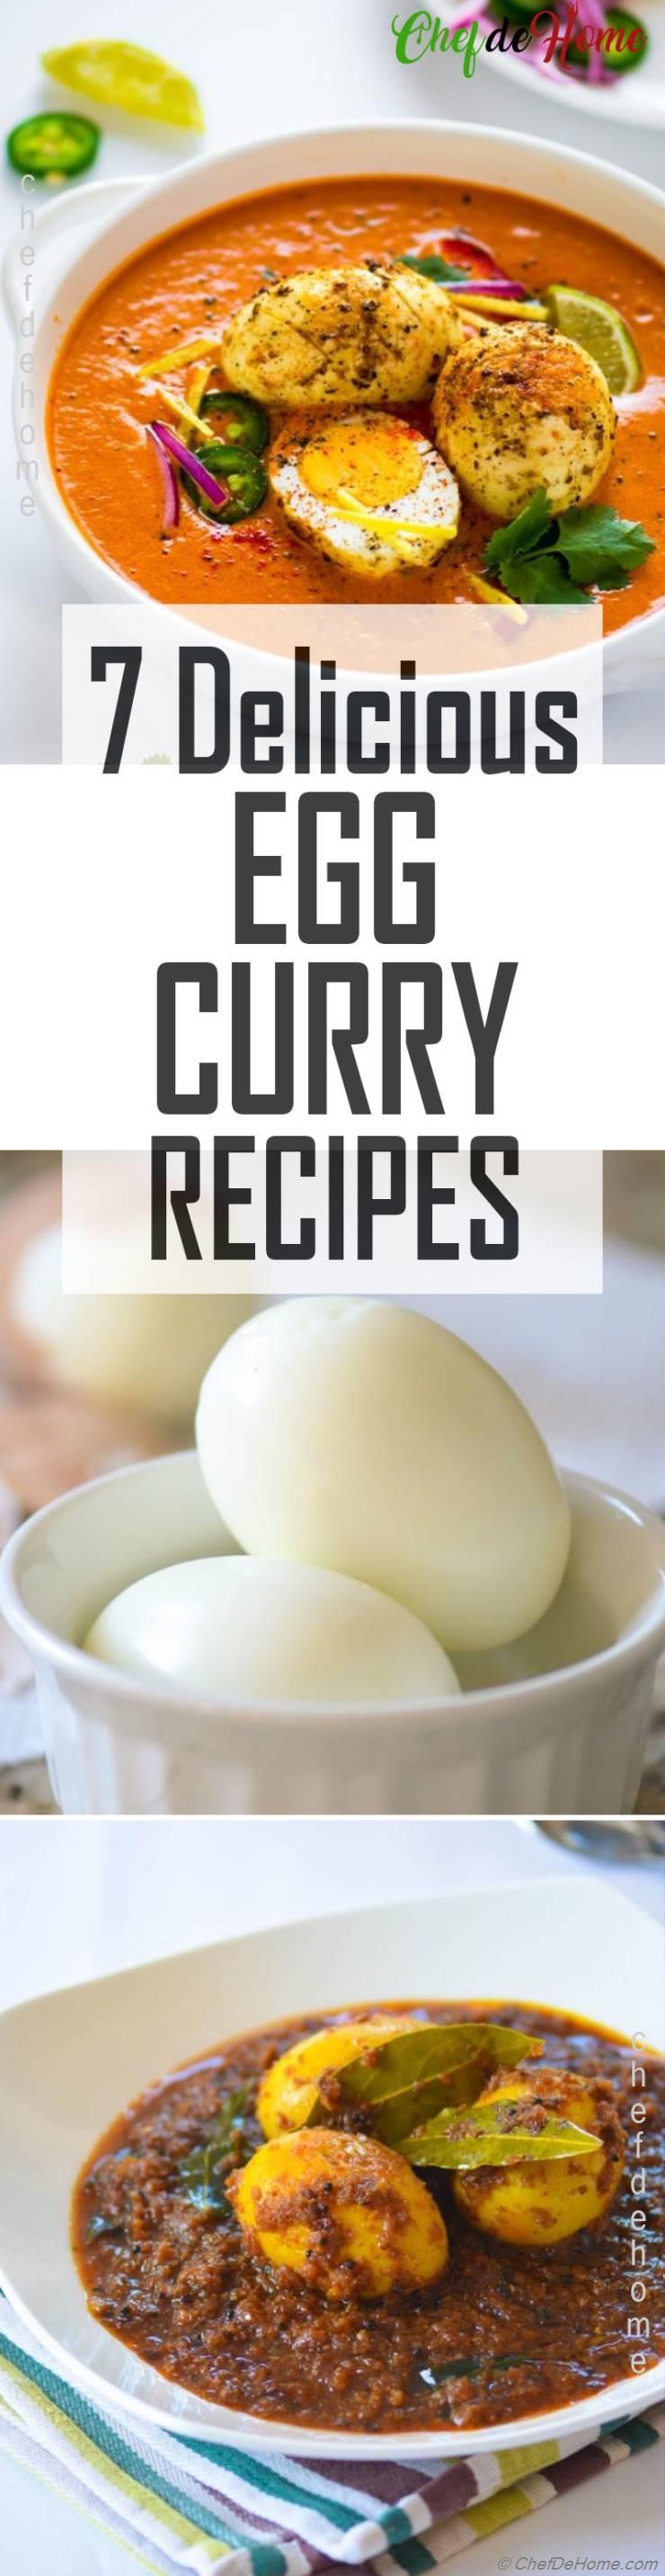 7 Delicious Egg Curry Recipes